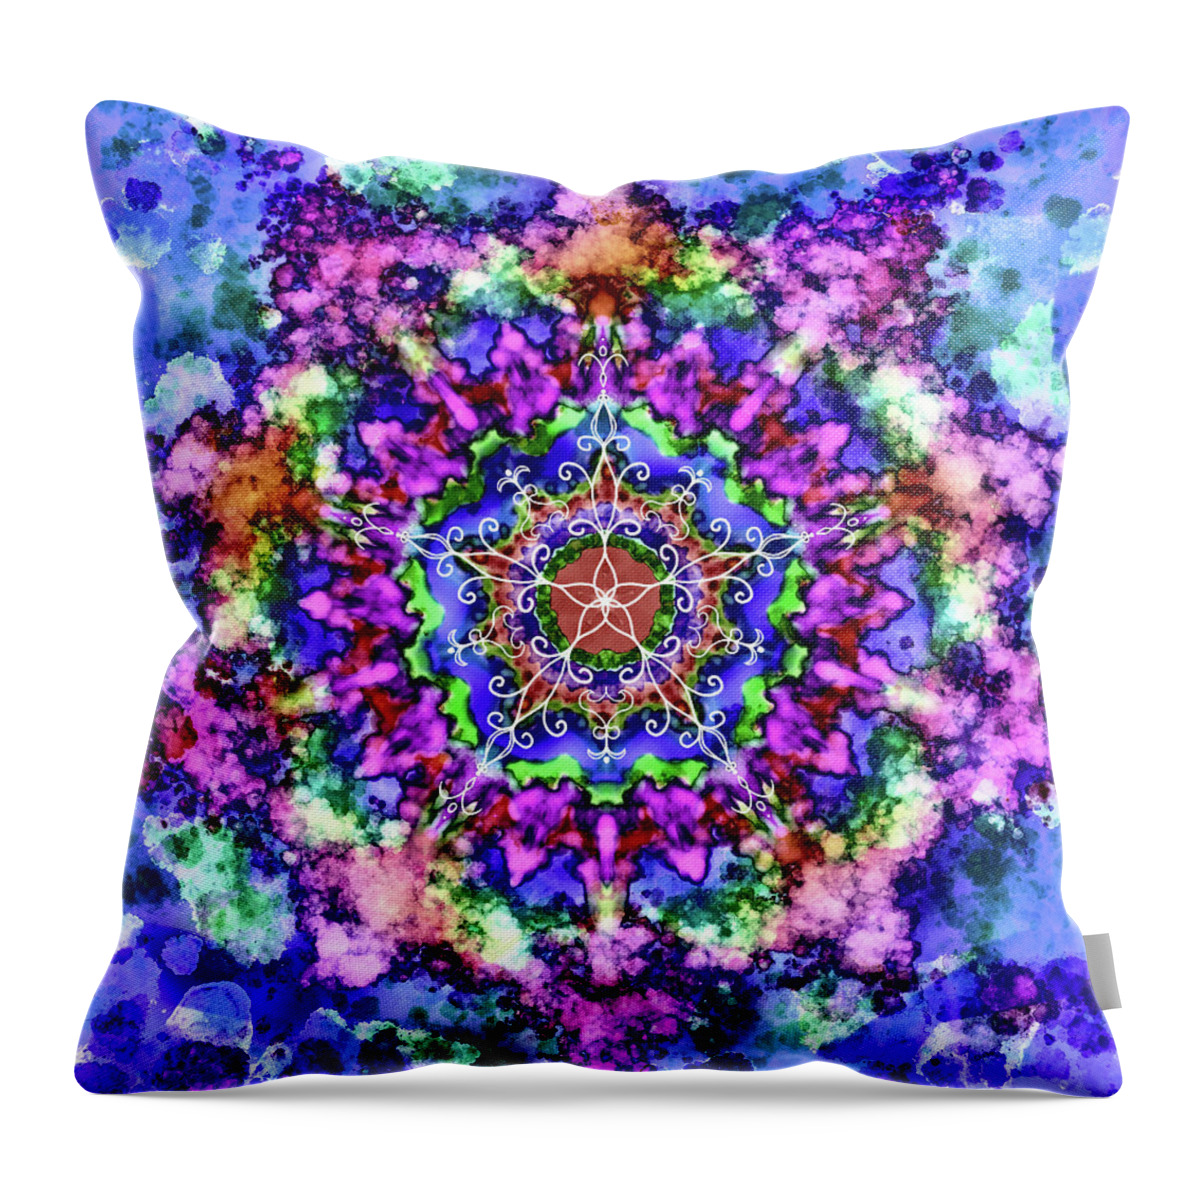 Blue And Purple Mandala Throw Pillow featuring the digital art Mandala Art 4 by Patricia Lintner